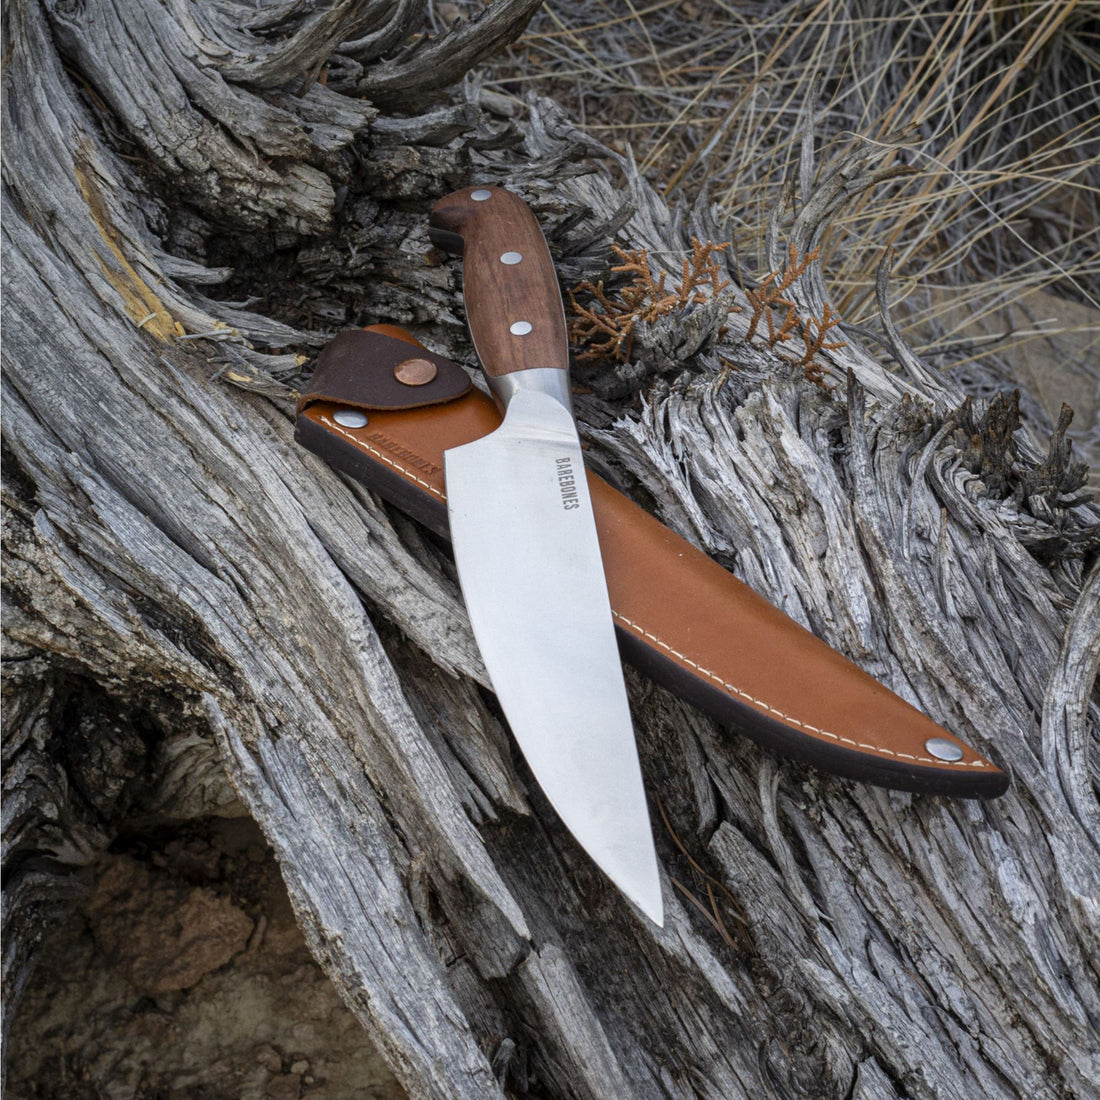 Buy Custom Made Leather Chef Knife Protective Sheath, made to